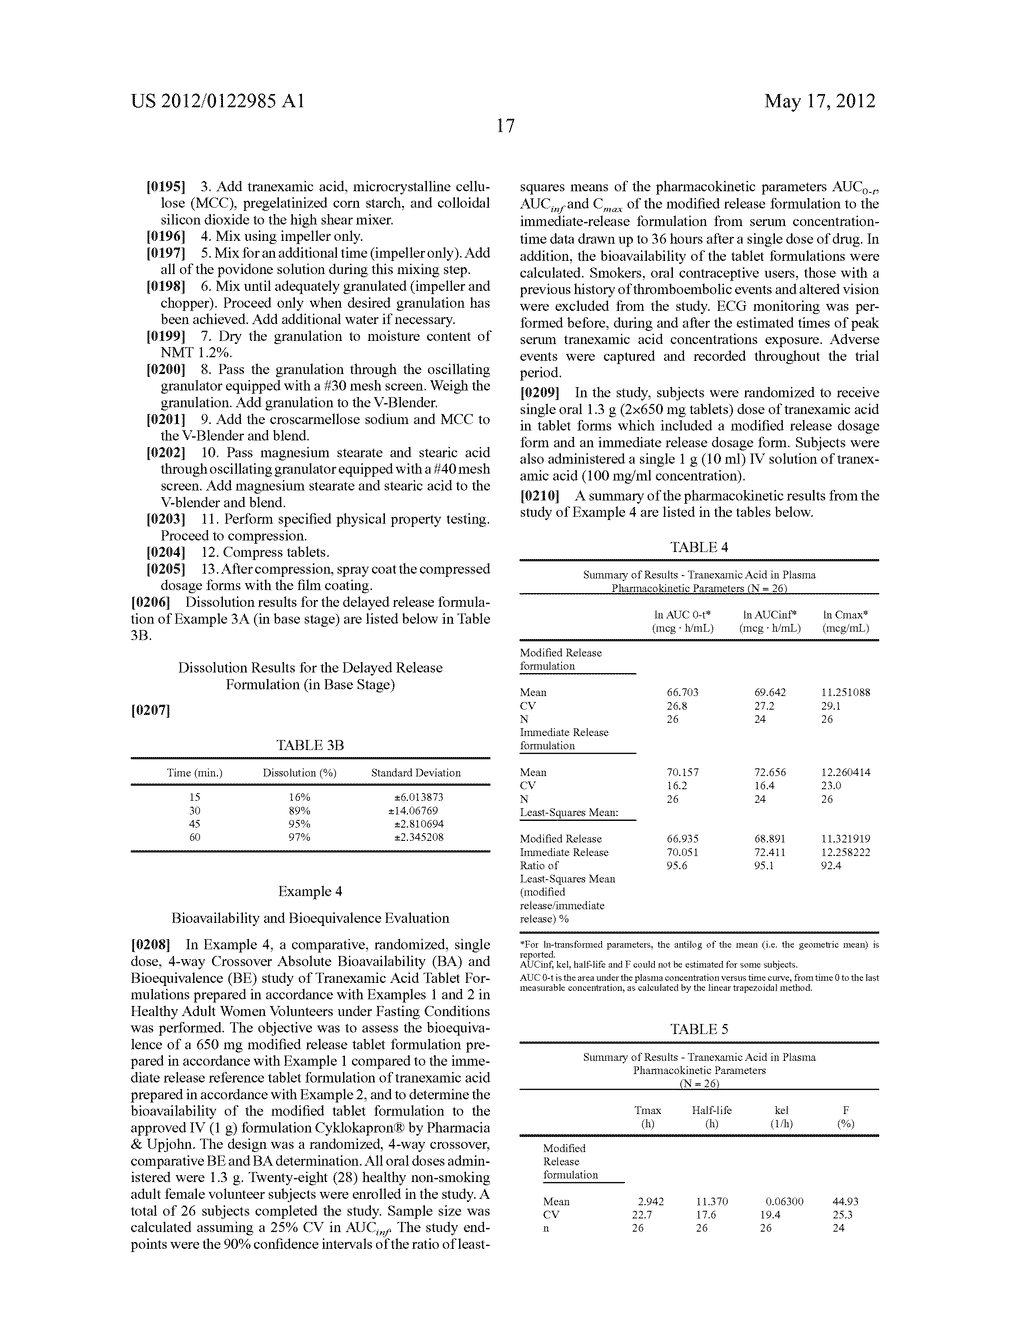 Tranexamic Acid Formulations - diagram, schematic, and image 25